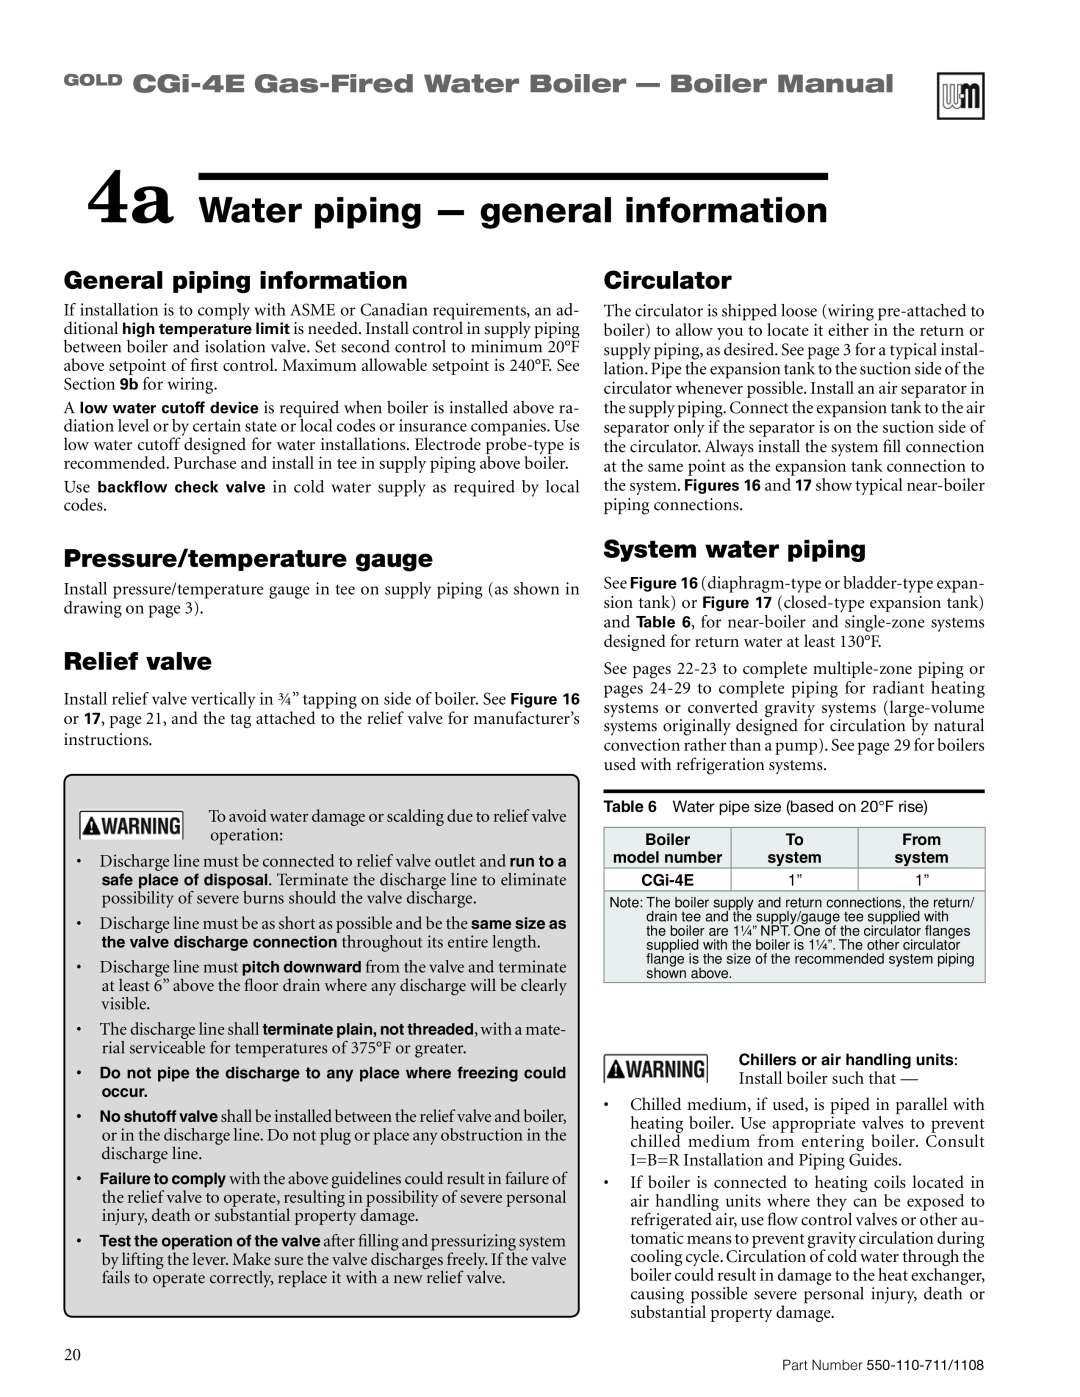 Weil-McLain CGI-4E 4a Water piping - general information, GOLD CGi-4E Gas-FiredWater Boiler - Boiler Manual, Circulator 